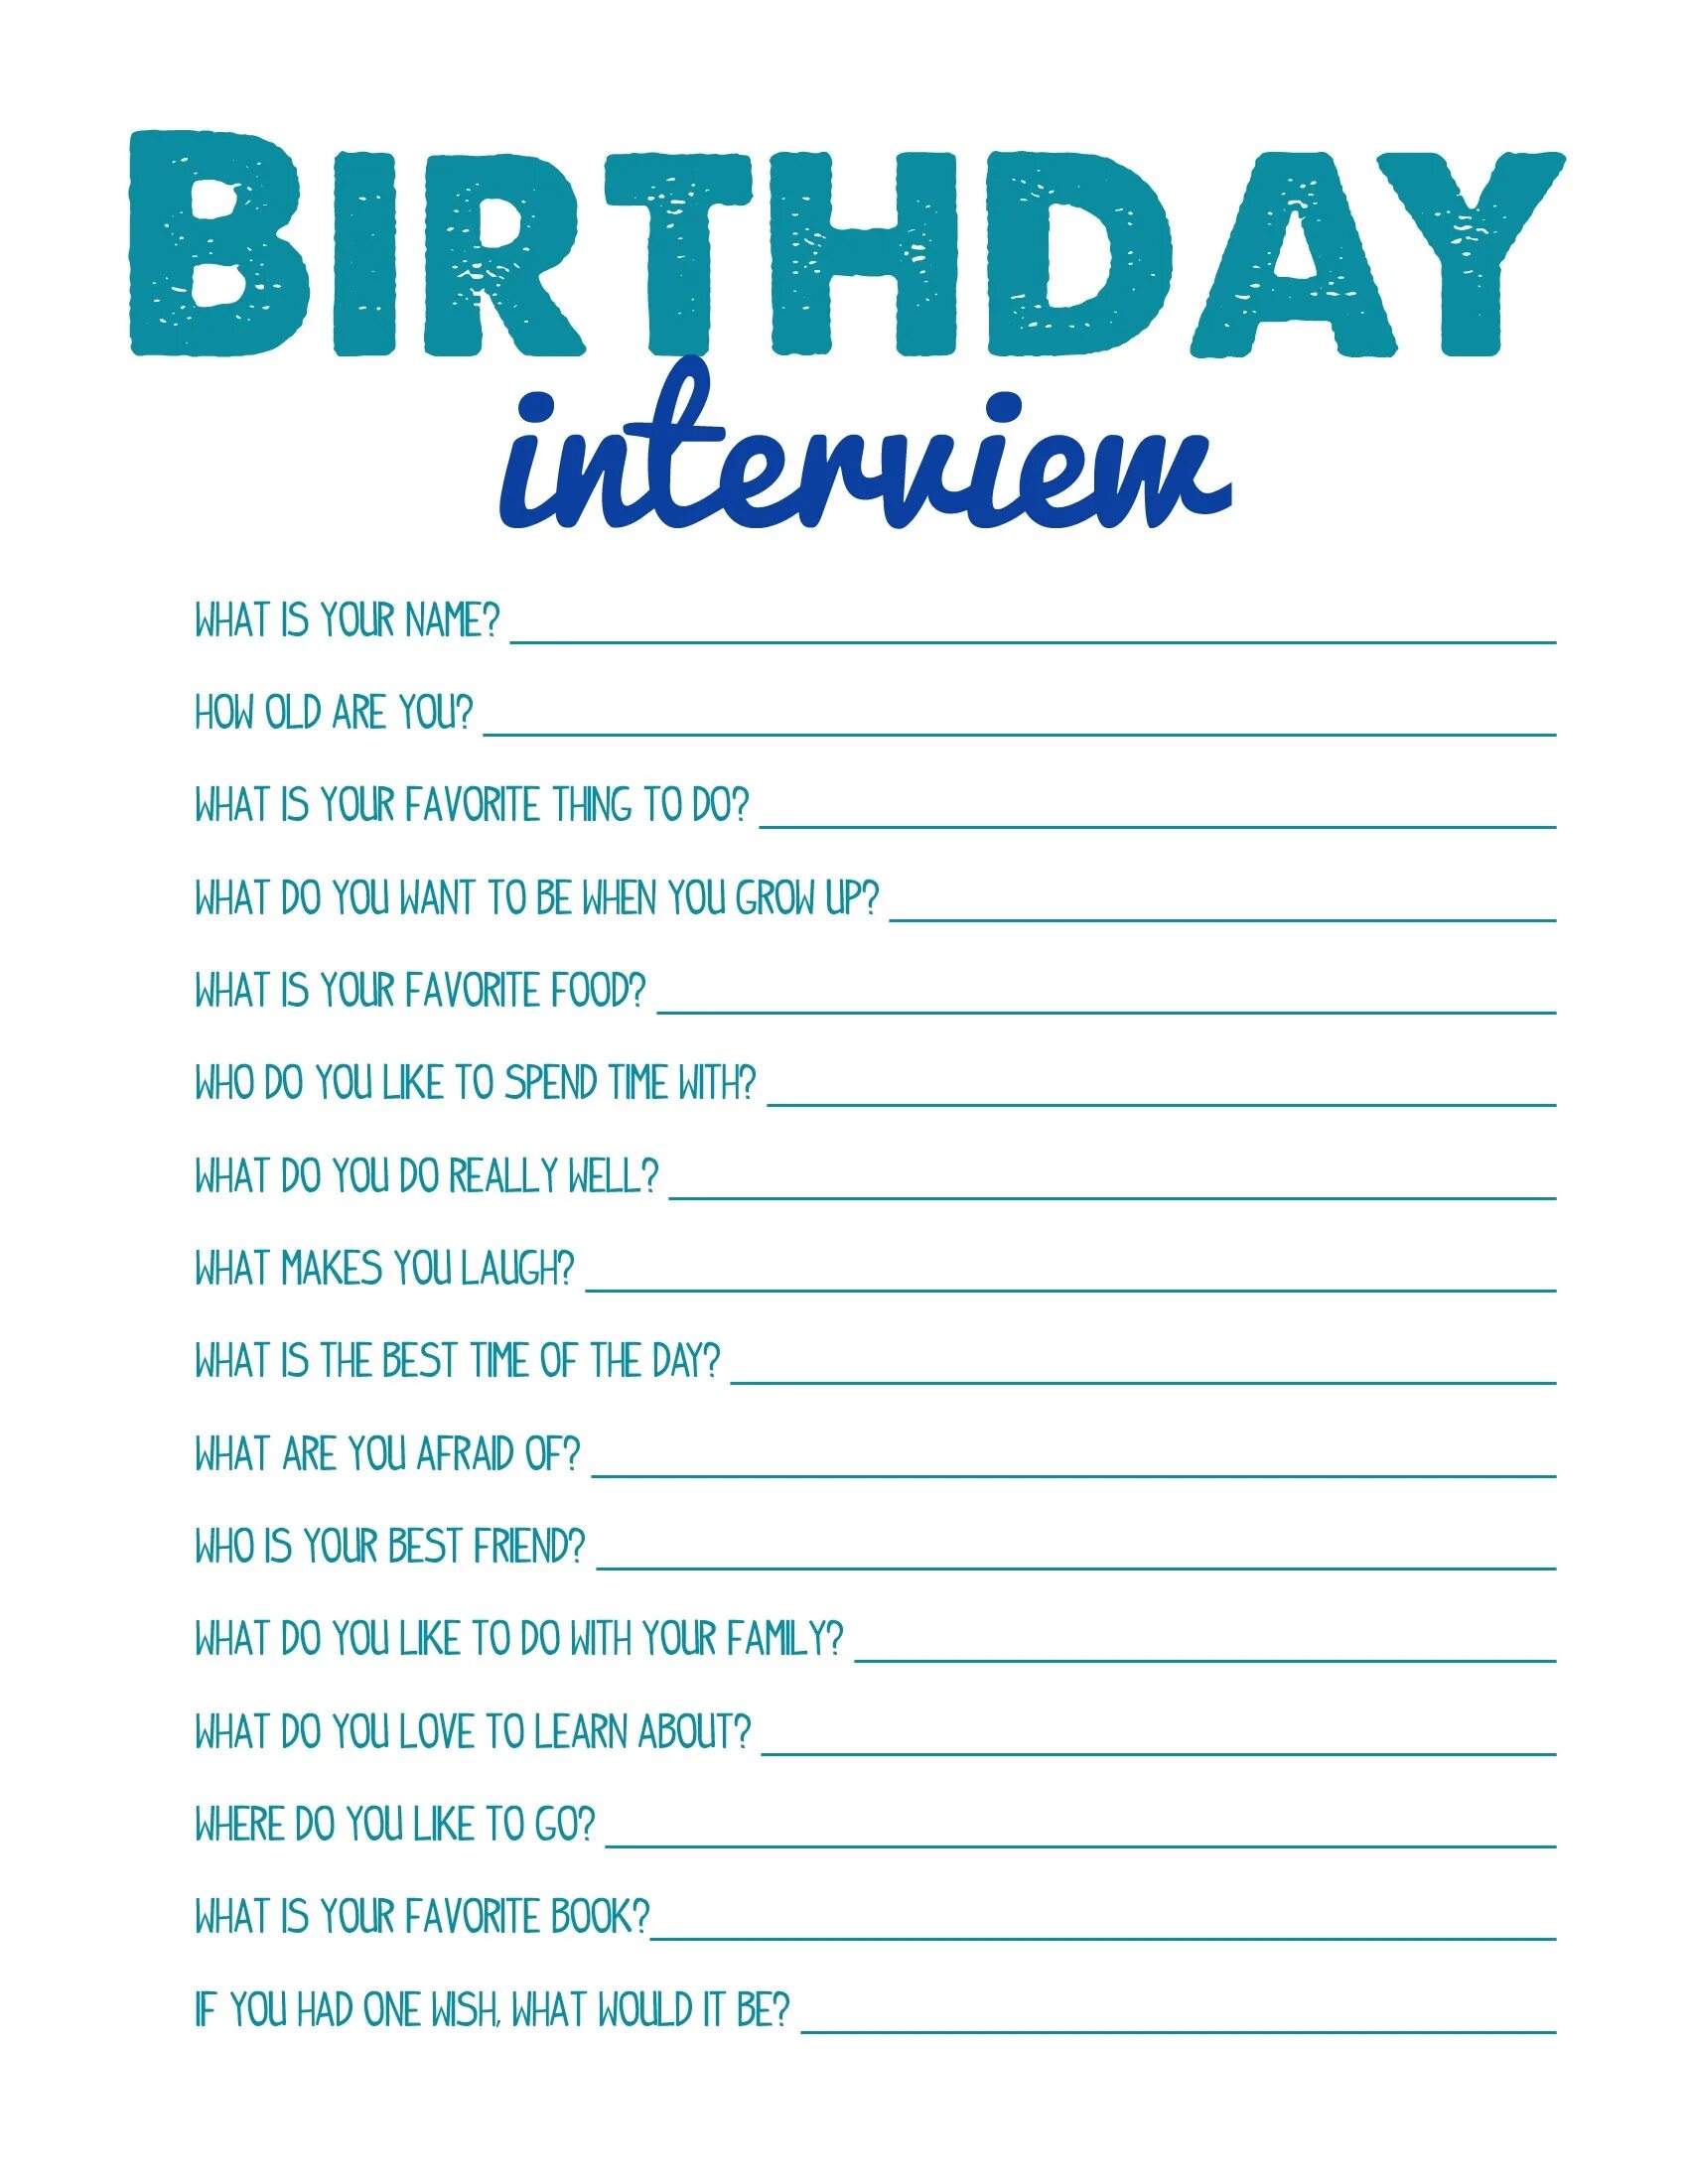 Birthday activities. Happy Birthday activity for Kids. Birthday activities for Kids. Birthday questions for Kids.